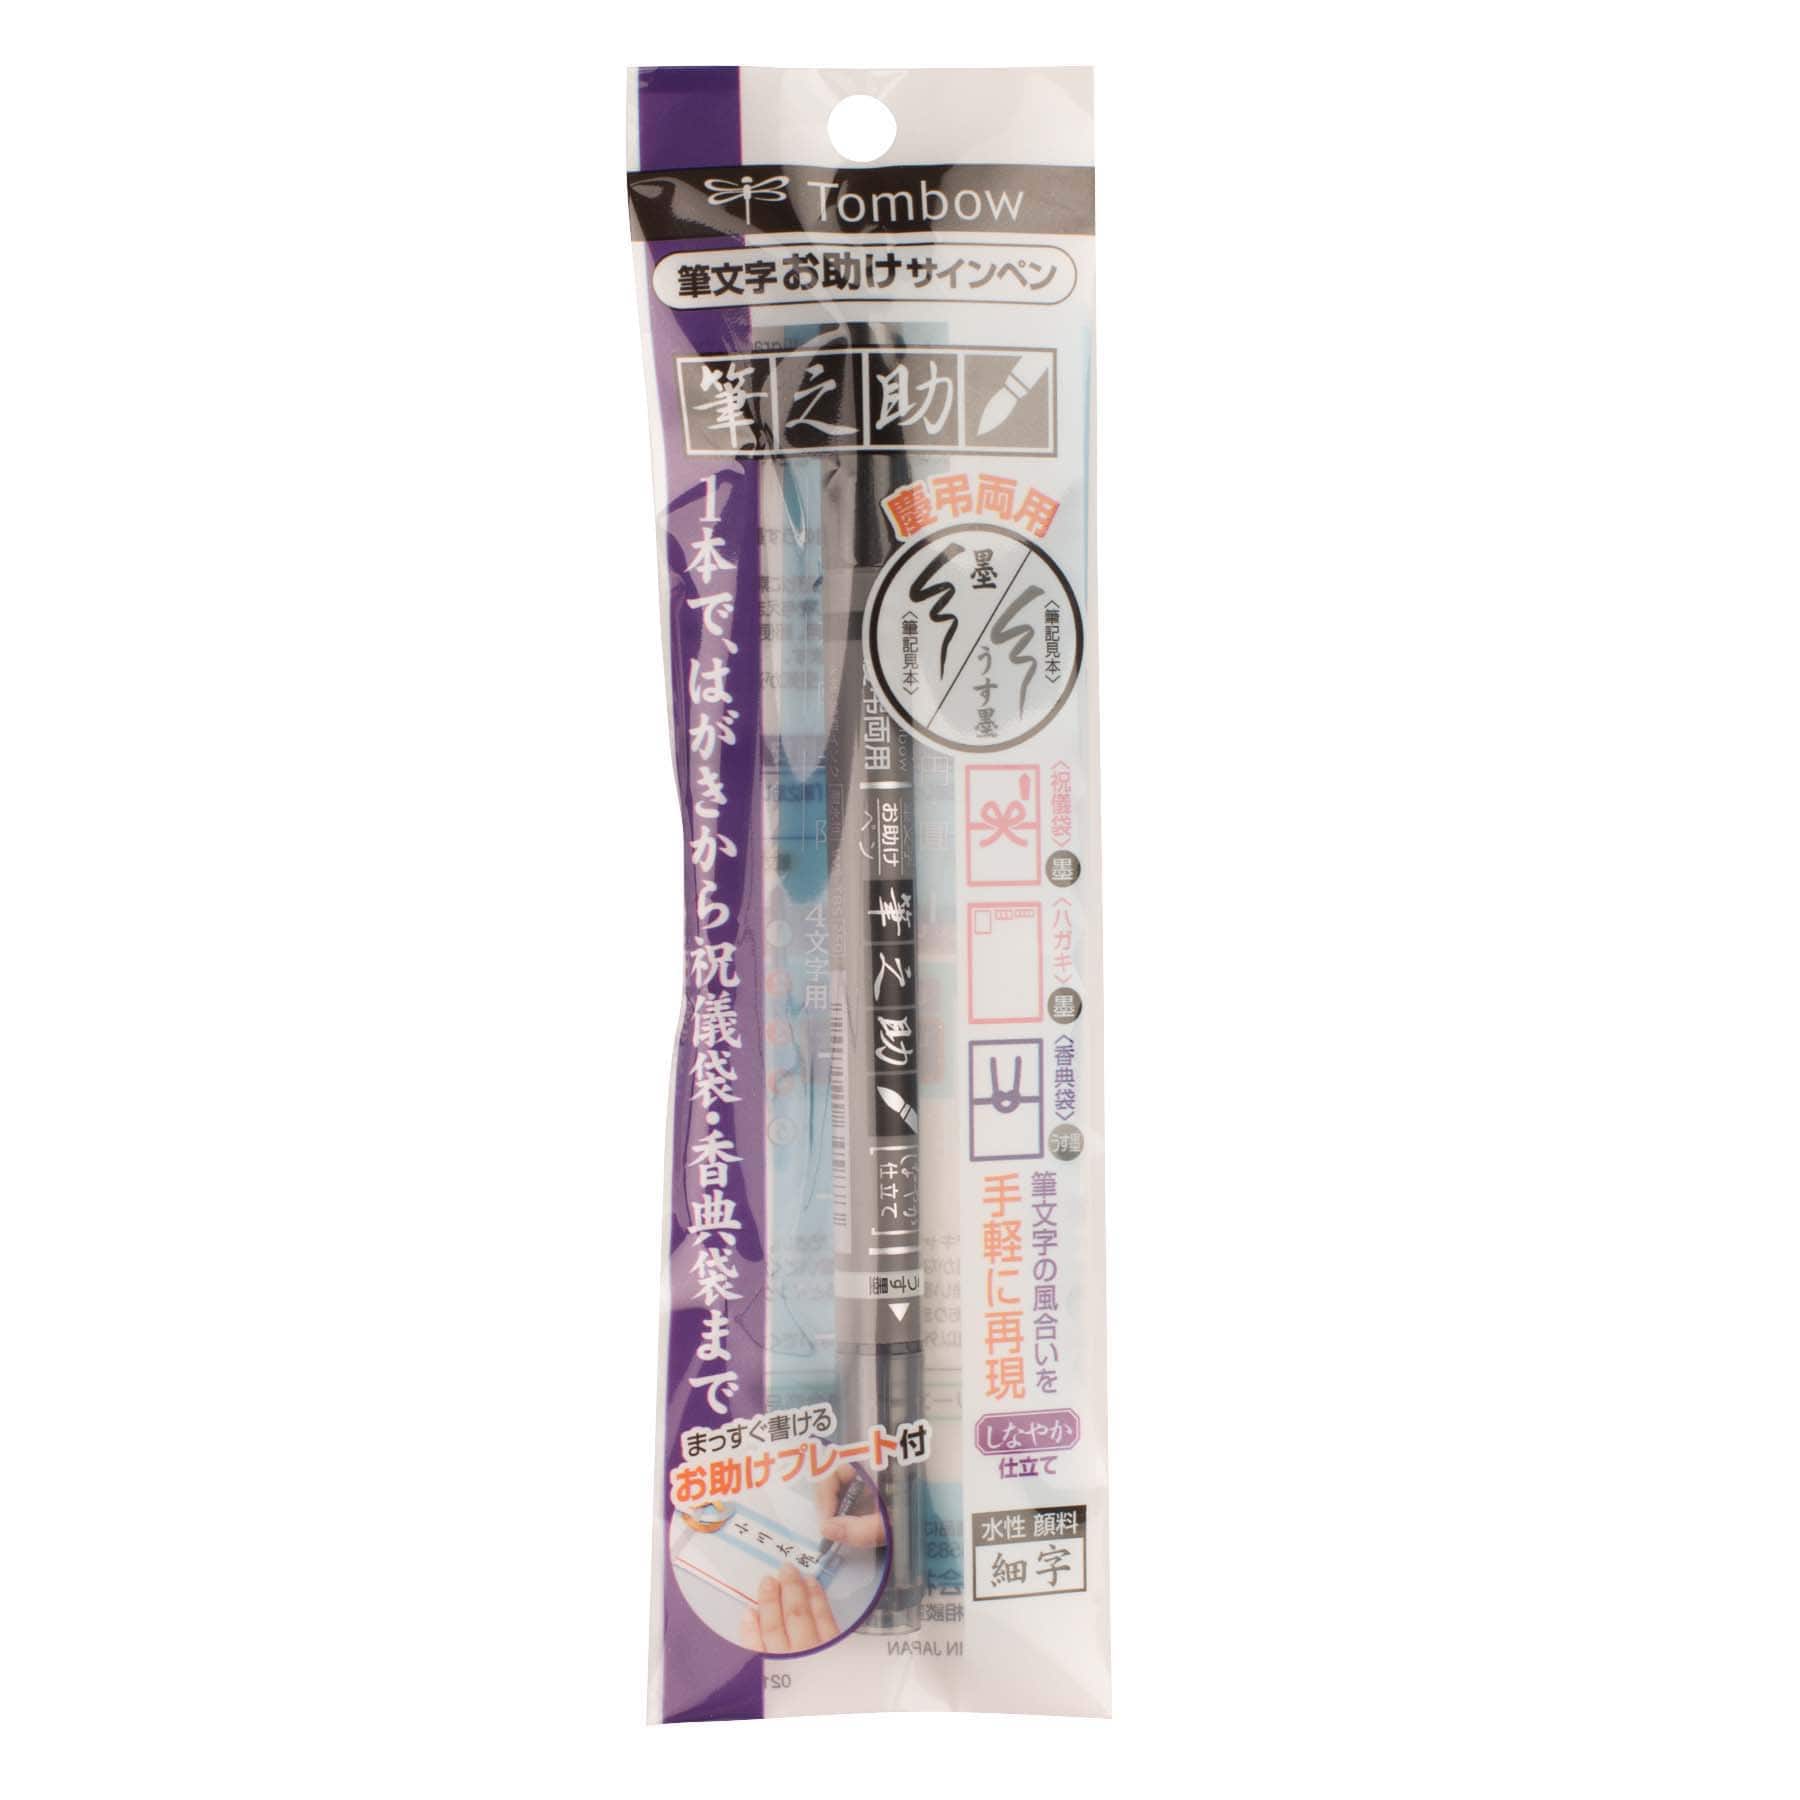 Tombow Fudenosuke Twin Tip Brush Pen